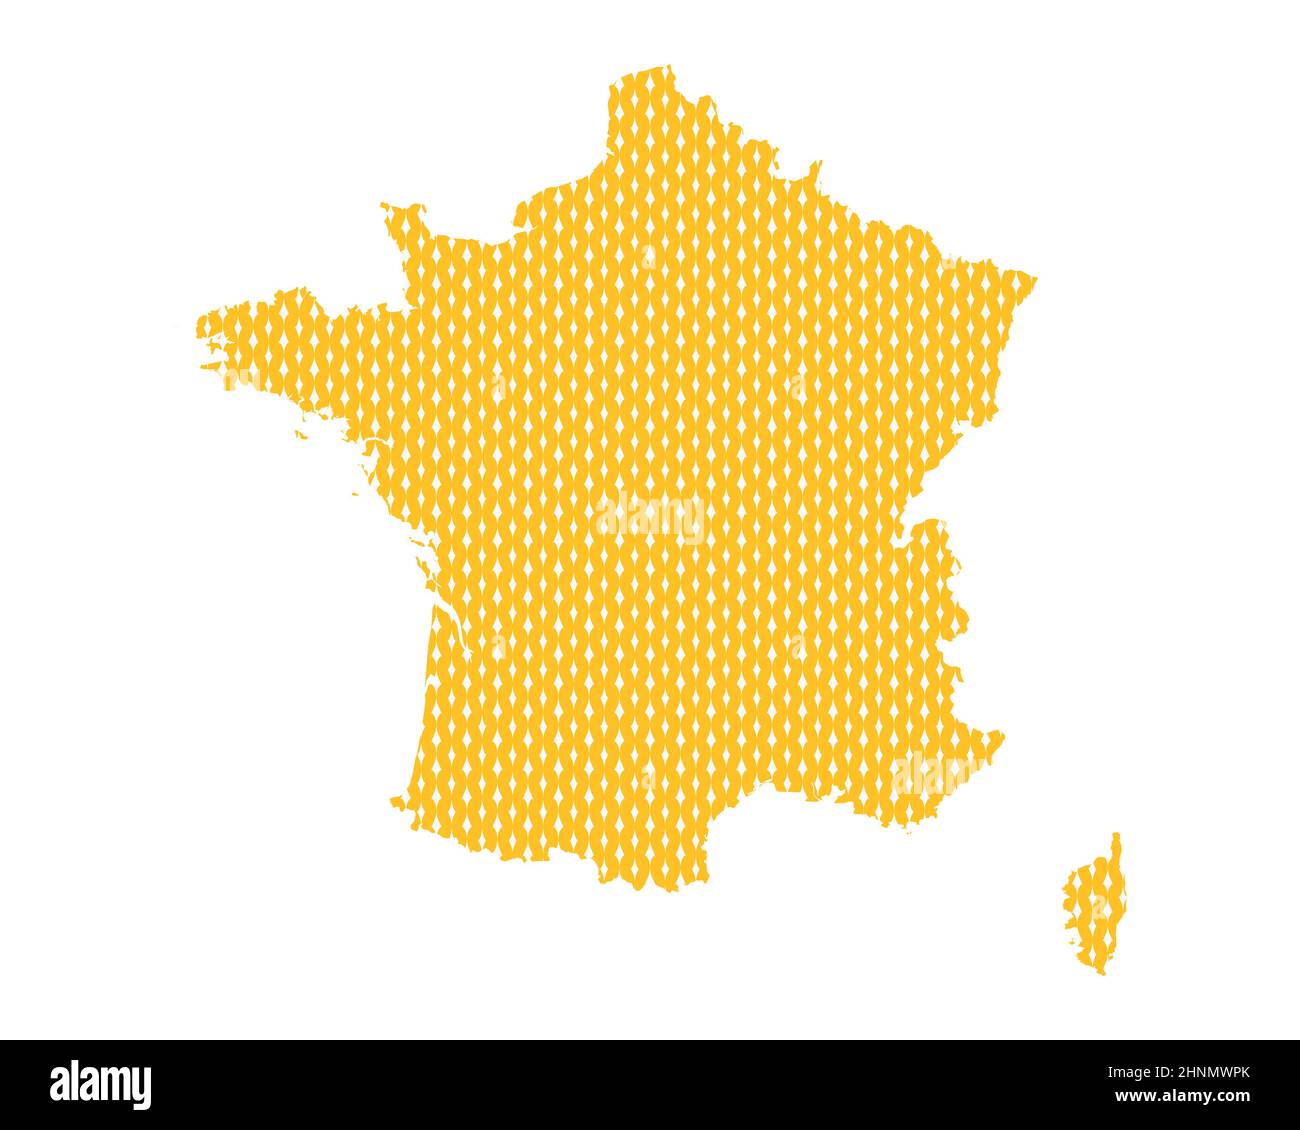 Plain map of France Stock Photo